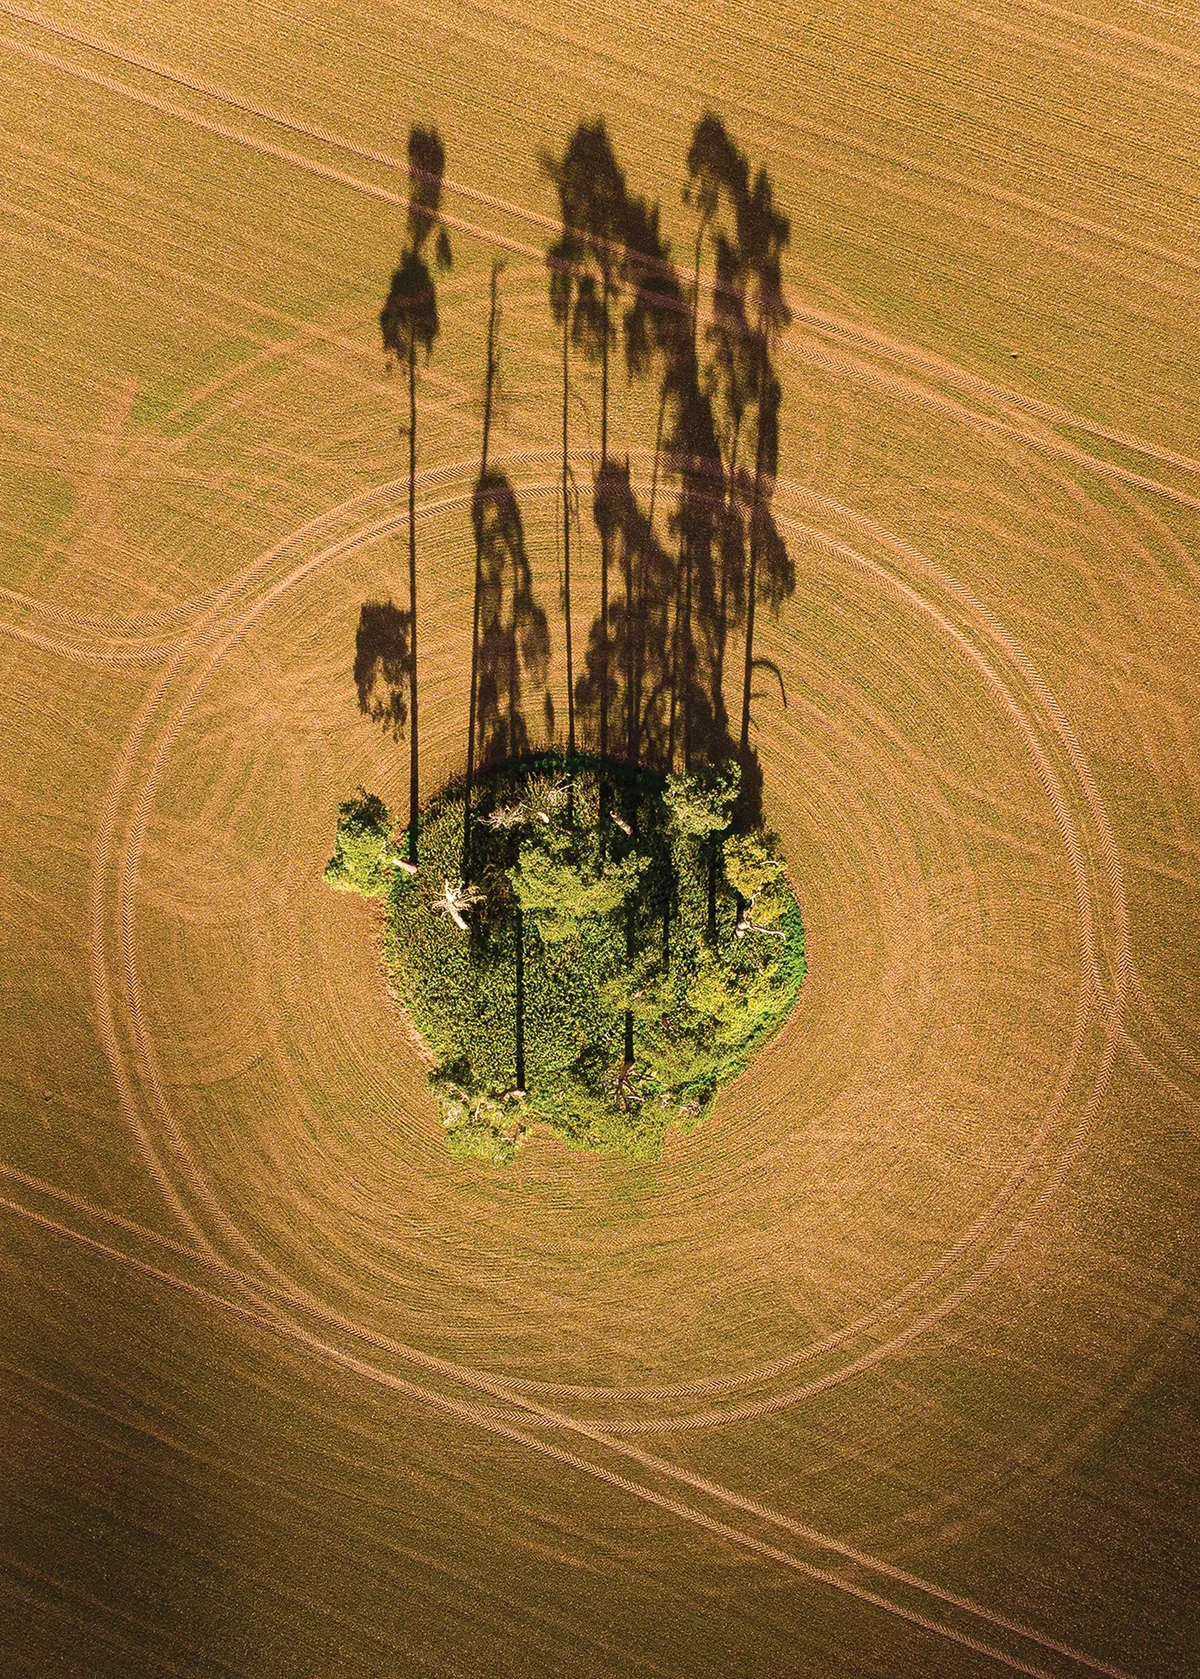 Tree Silhouettes by Felix Belloin